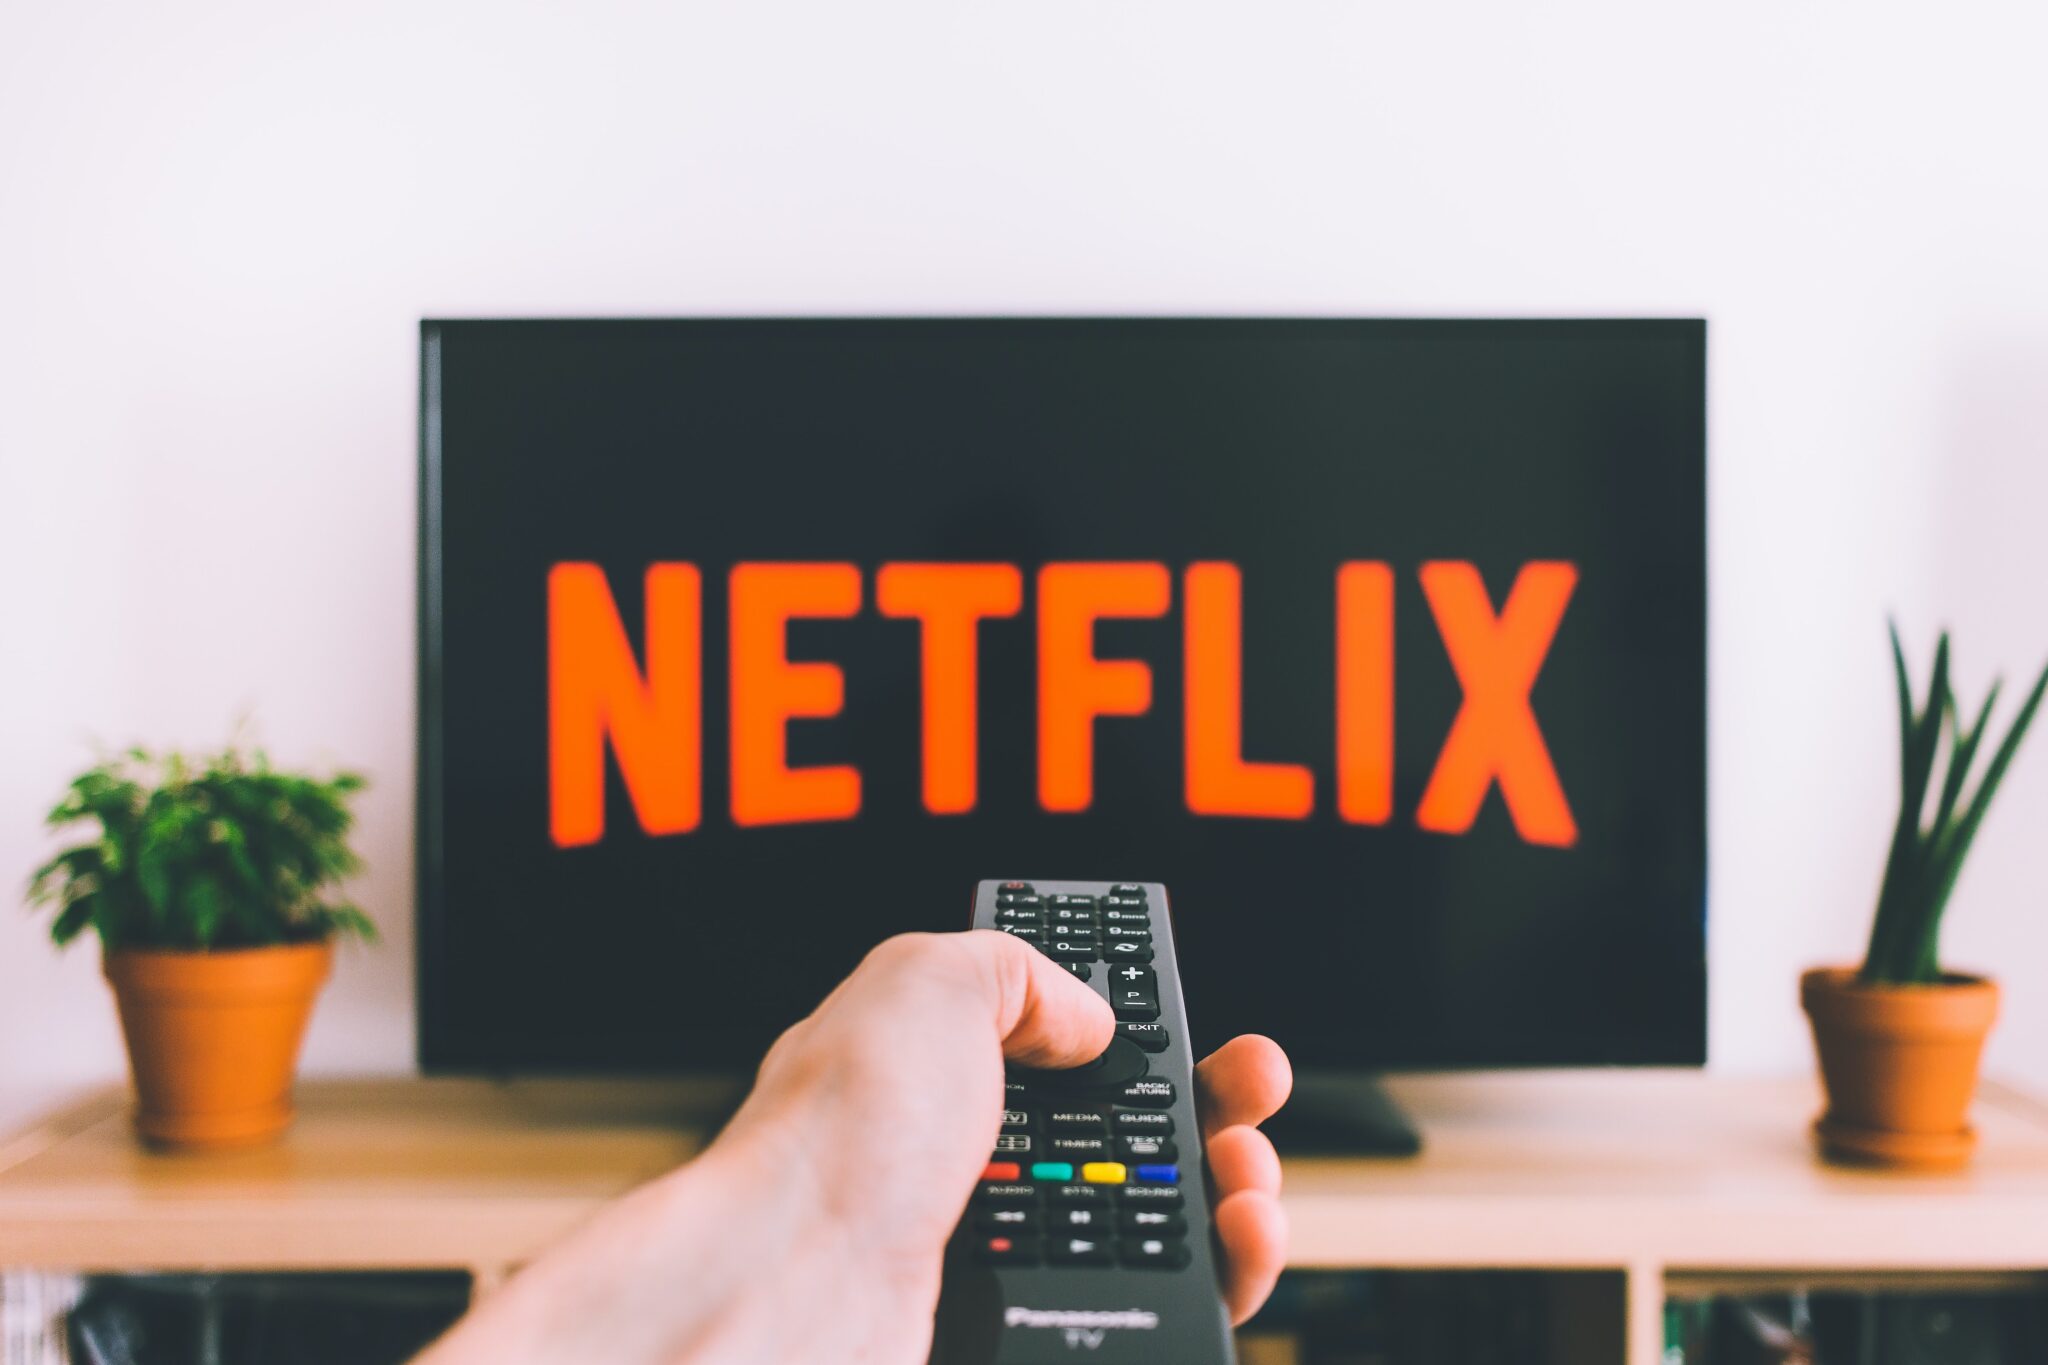 How to update Netflix on a Samsung TV